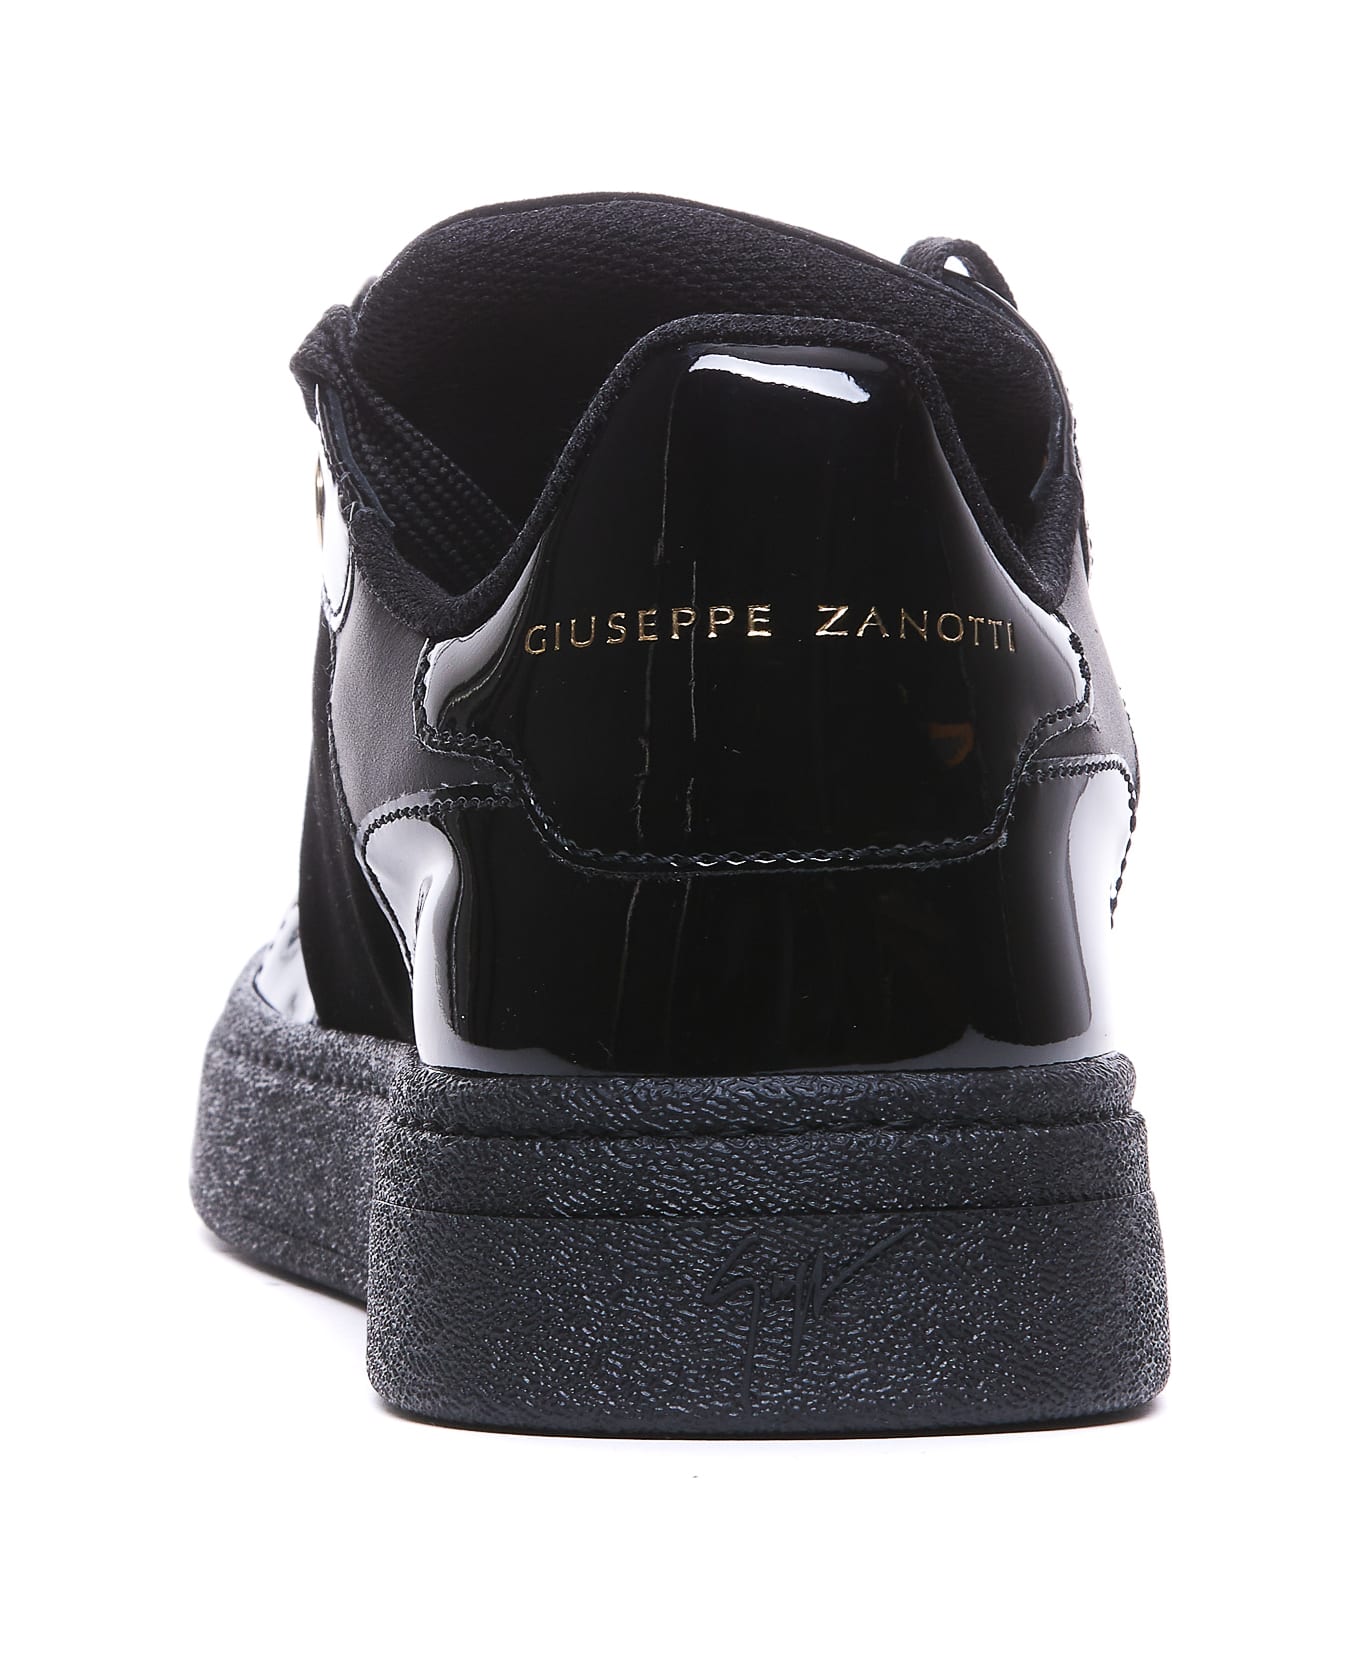 Giuseppe Zanotti Veronica Sneakers - Black